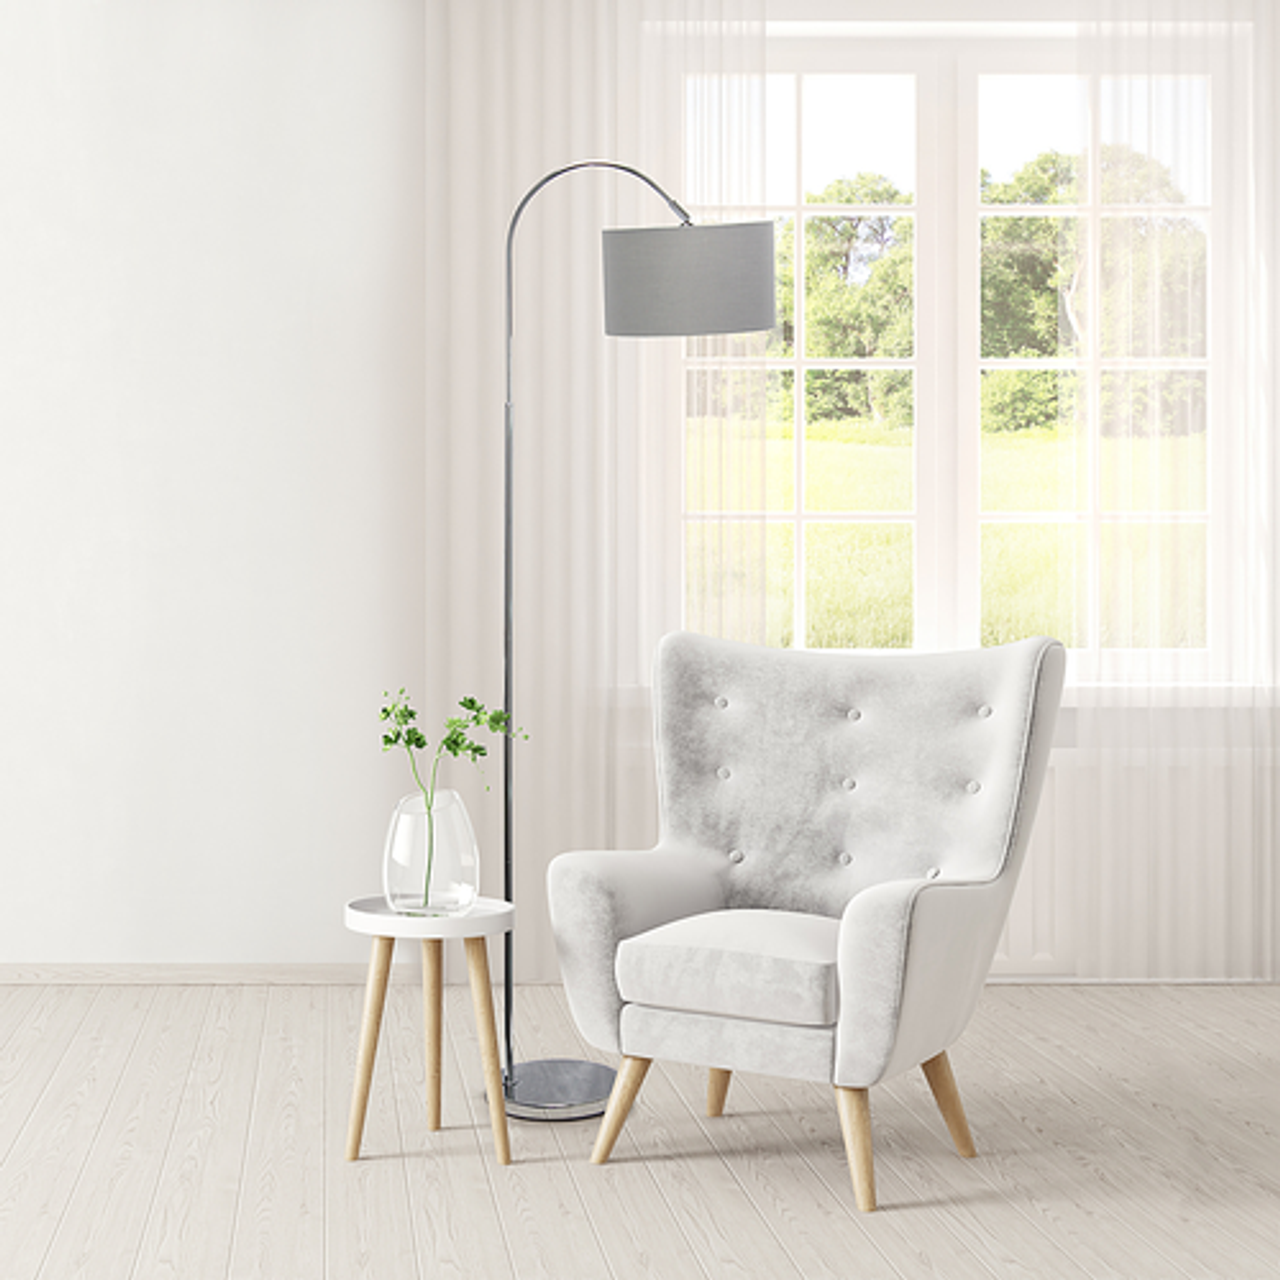 Simple Designs Arched Brushed Nickel Floor Lamp, Gray Shade - Brushed Nickel base/Gray shade